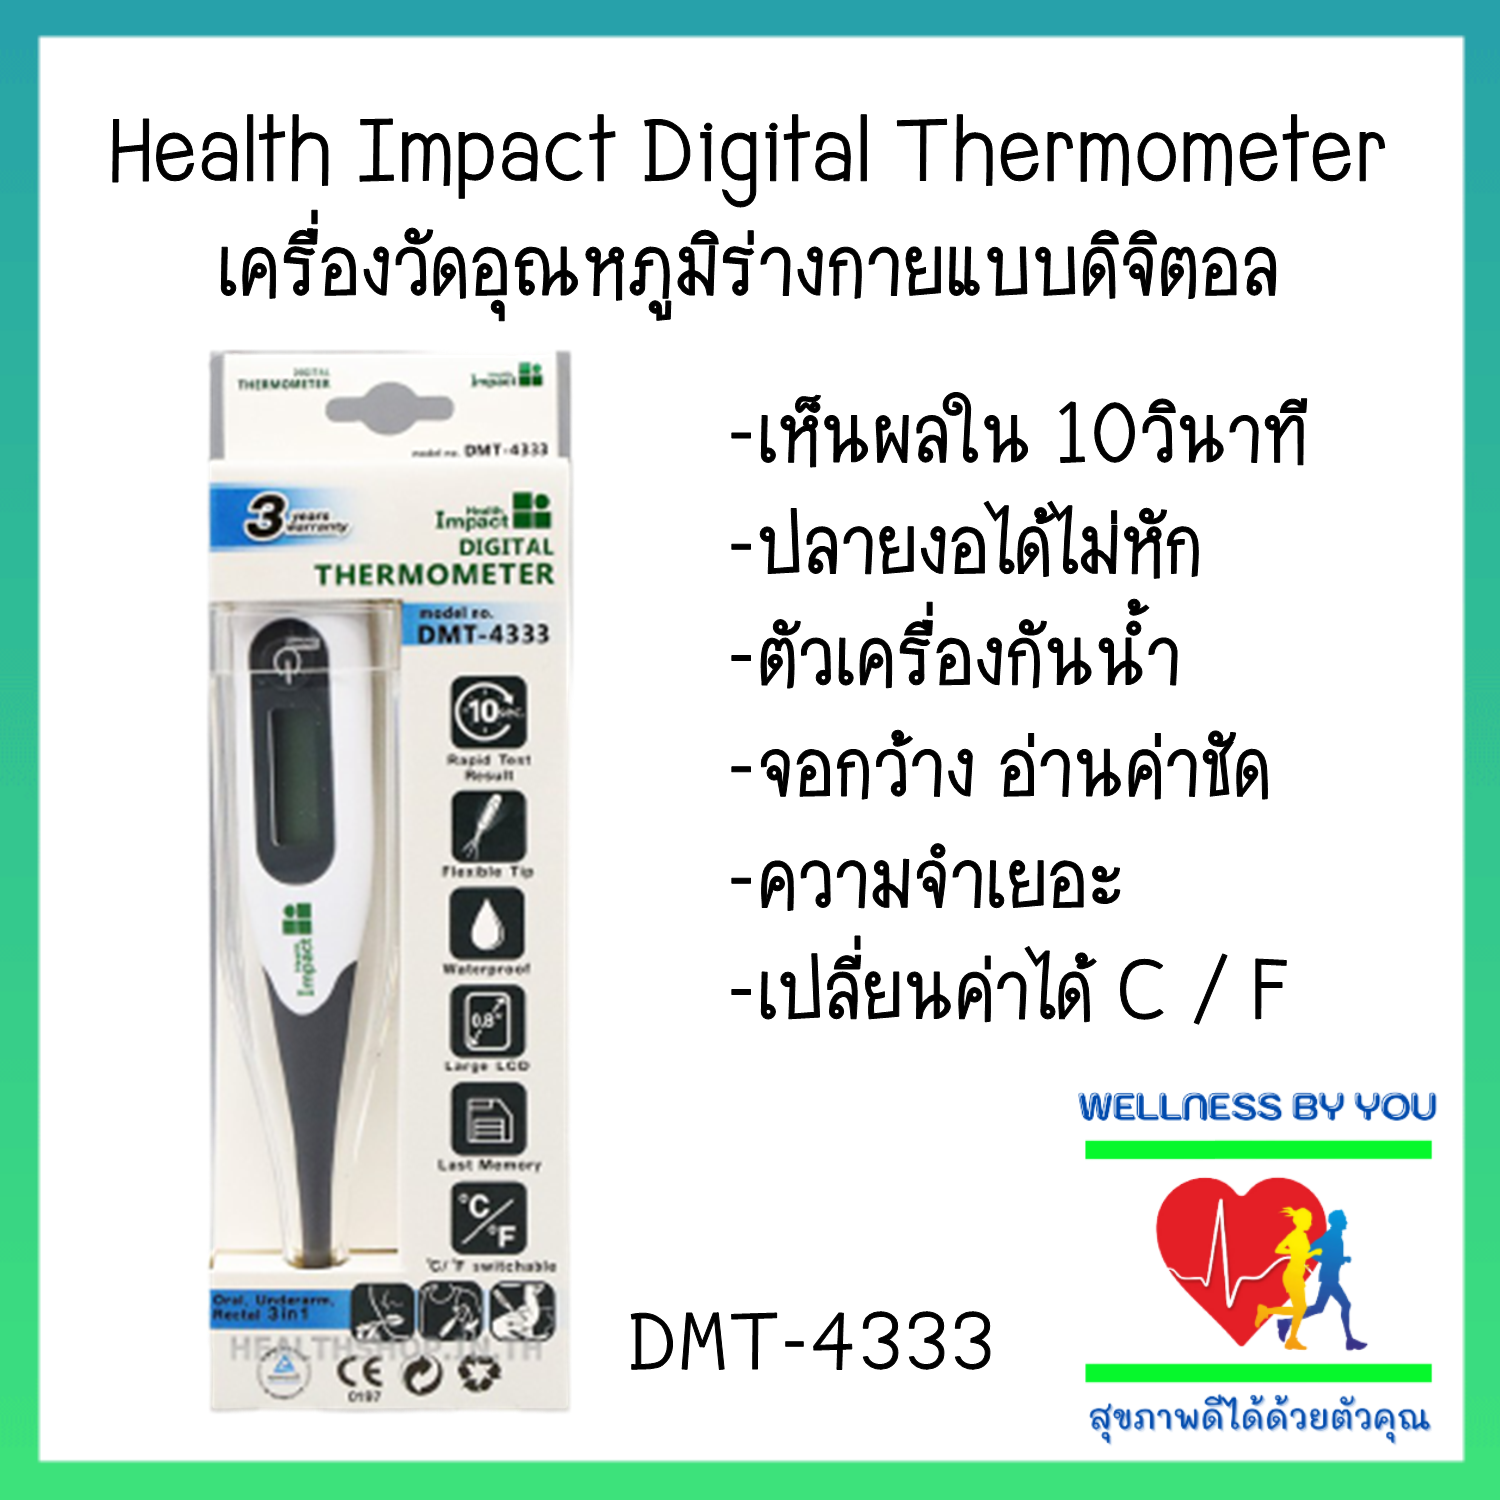 Health Impact Digital Thermometer DMT-4333 เครื่องวัดอุณหภูมิร่างกายแบบดิจิตอล วัดไข้ (คละสี)